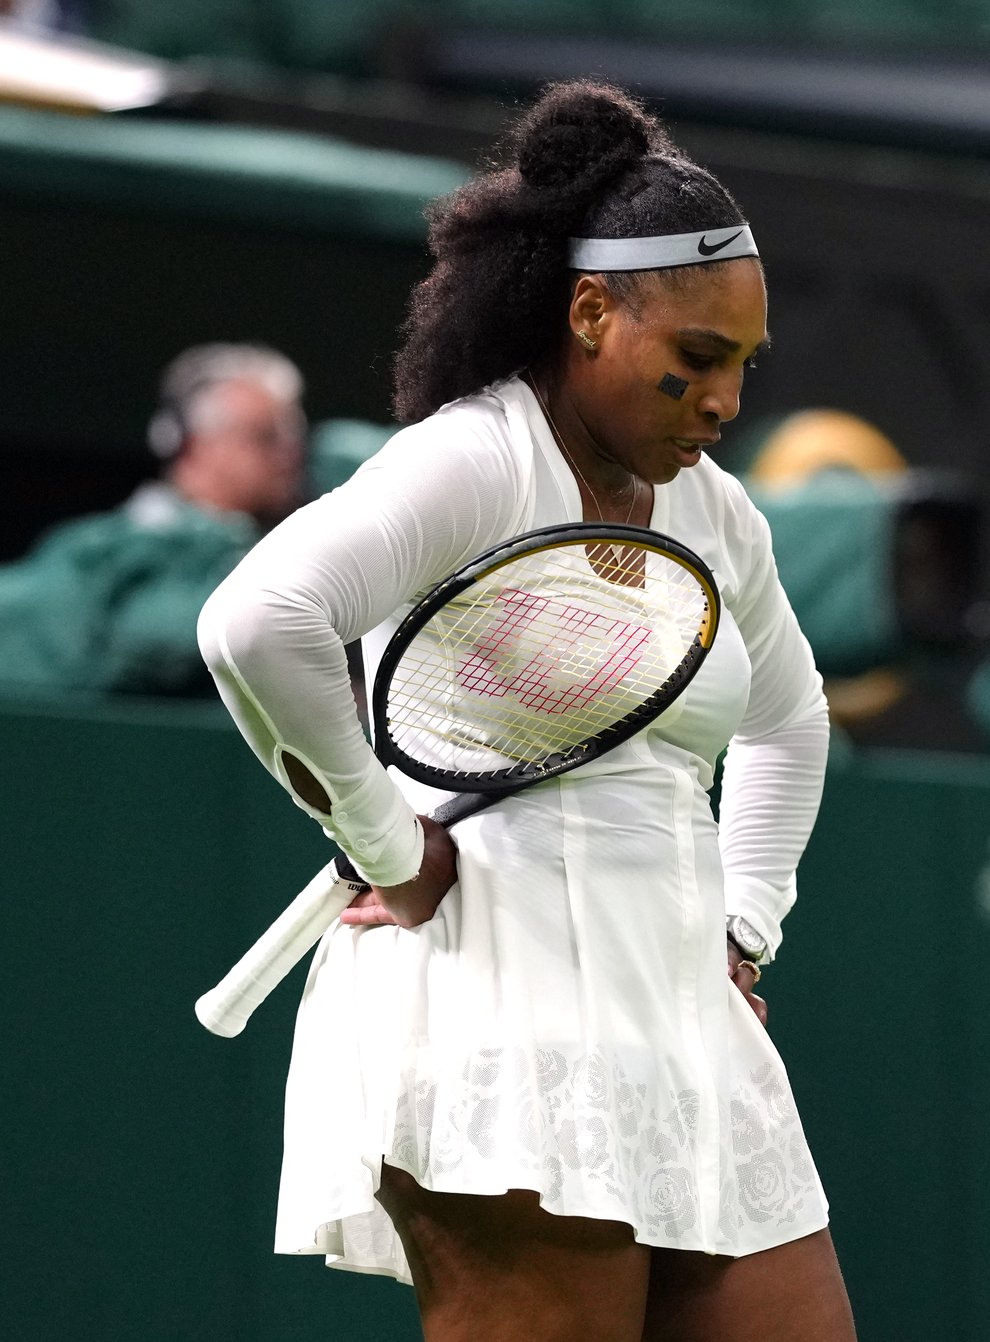 Serena Williams was beaten in the first round at Wimbledon (John Walton/PA)